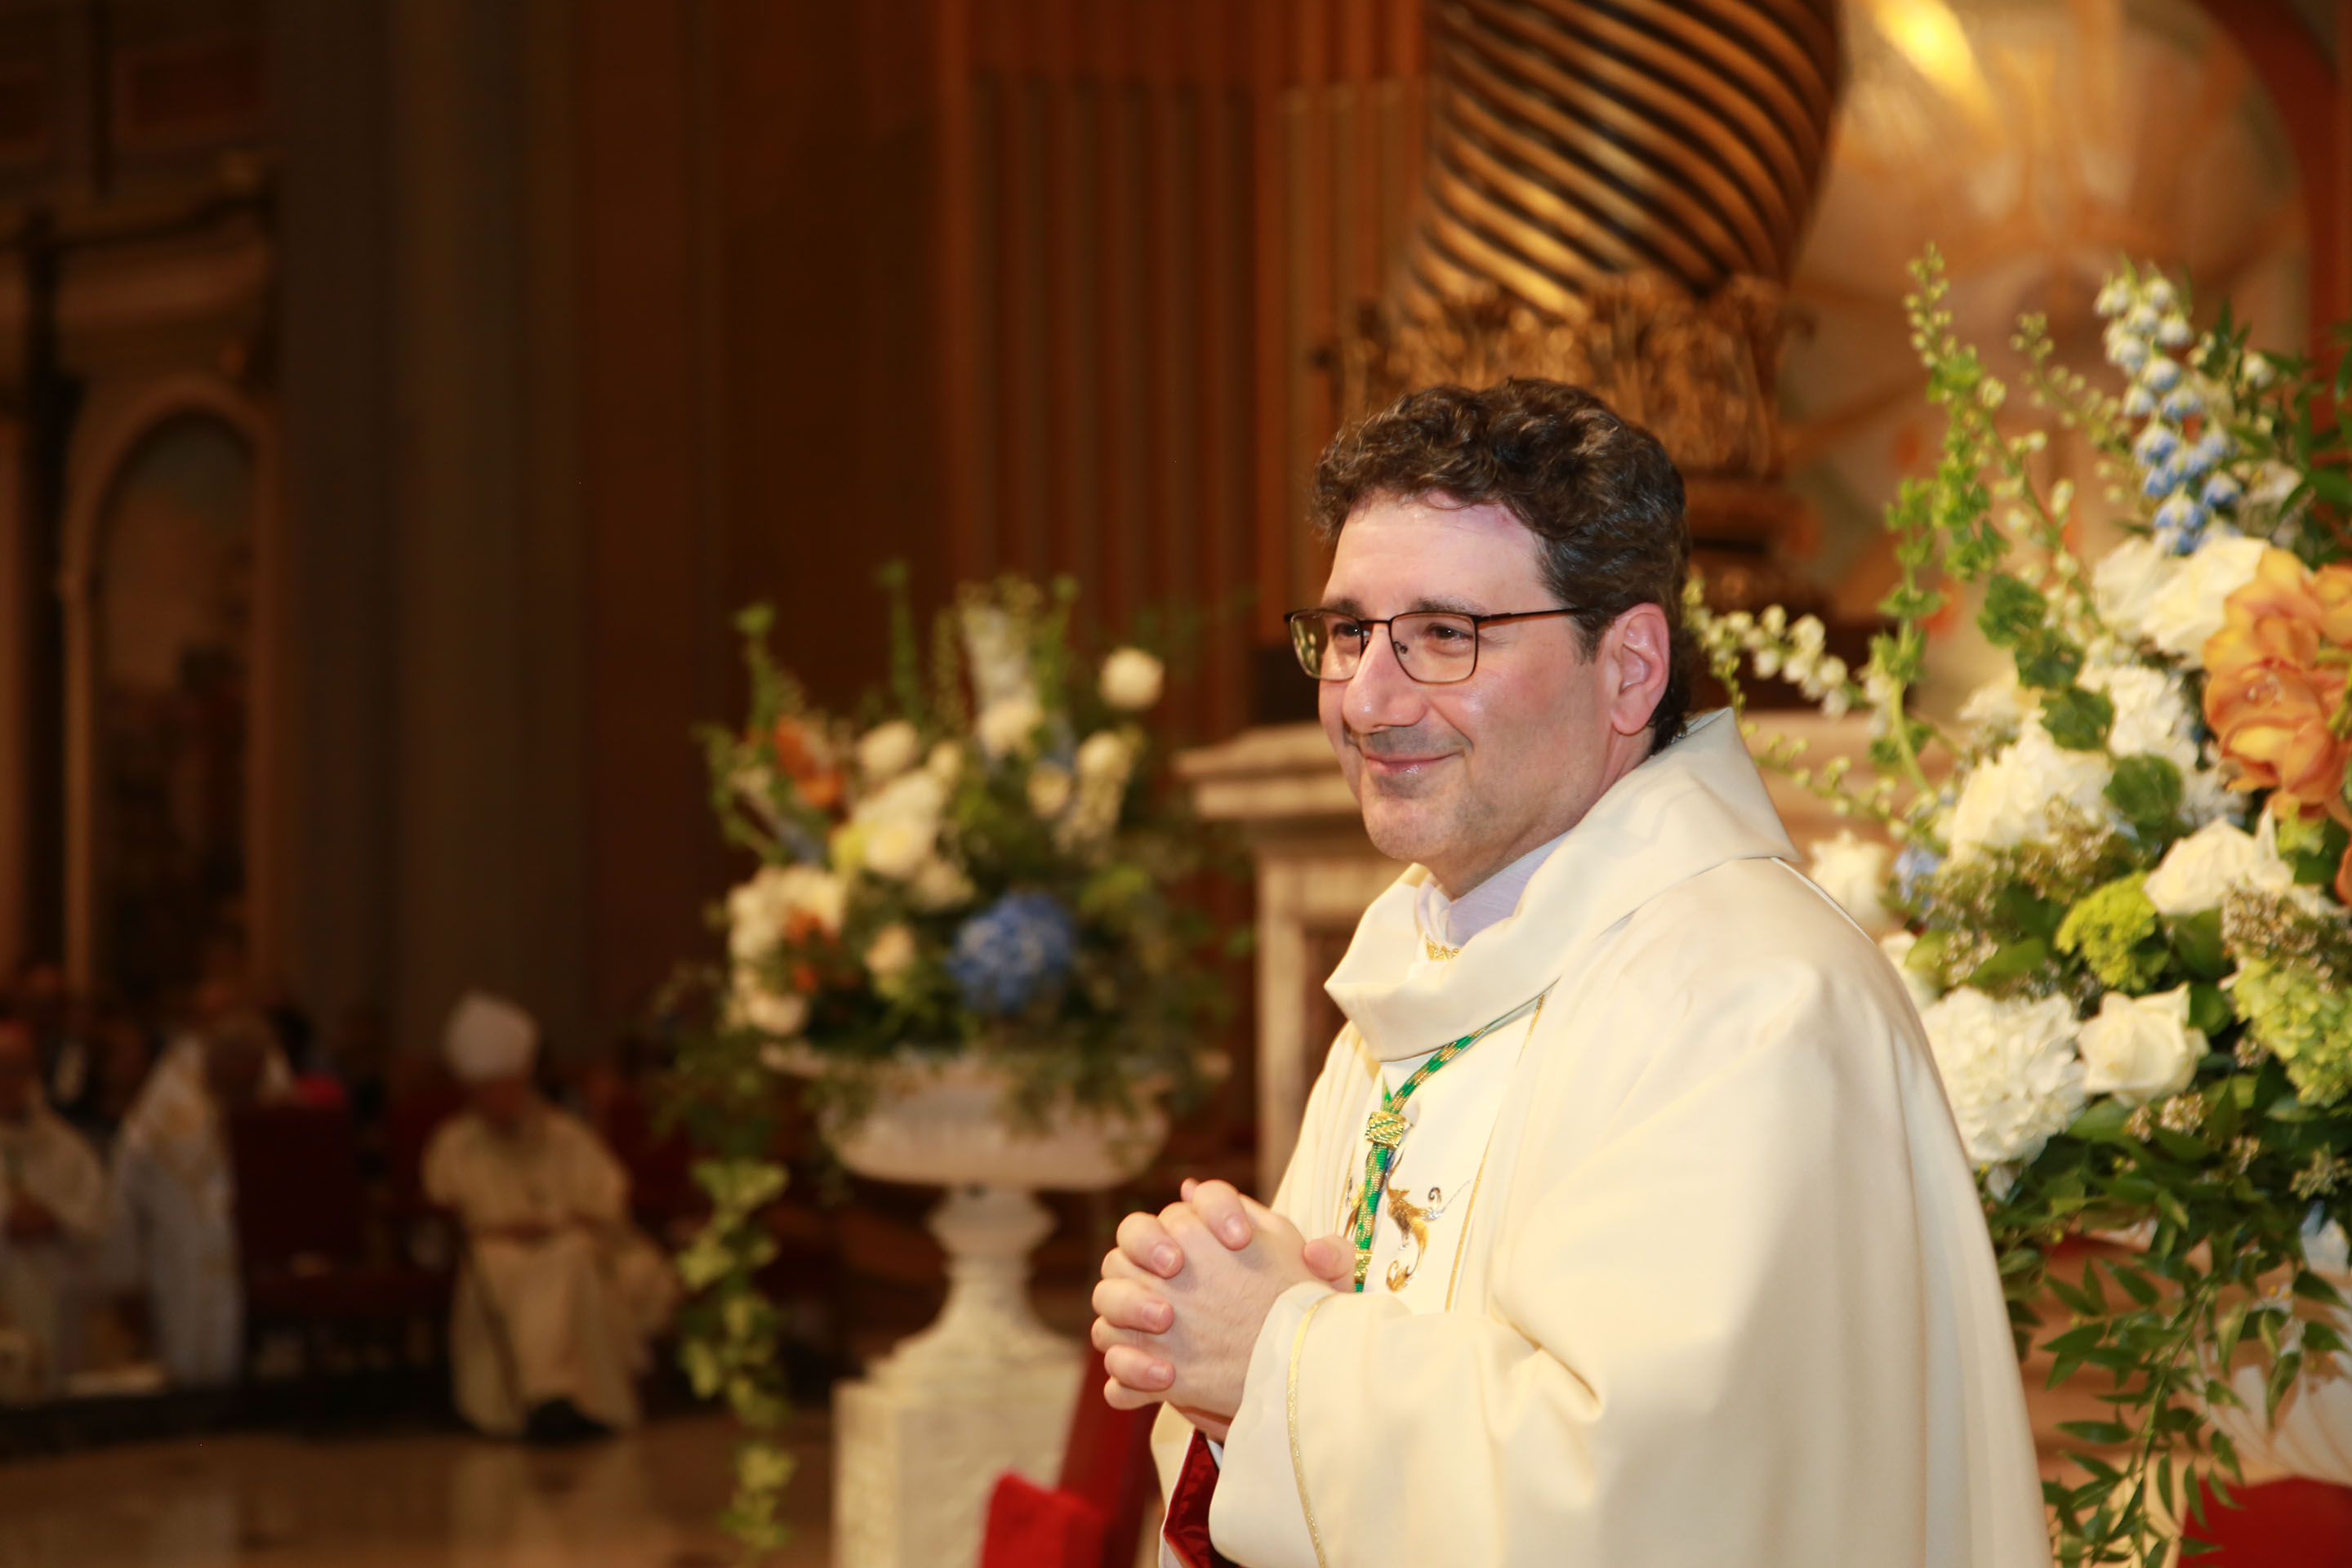 Mgr Frank Leo de Montréal sera installé comme prochain archevêque de Toronto